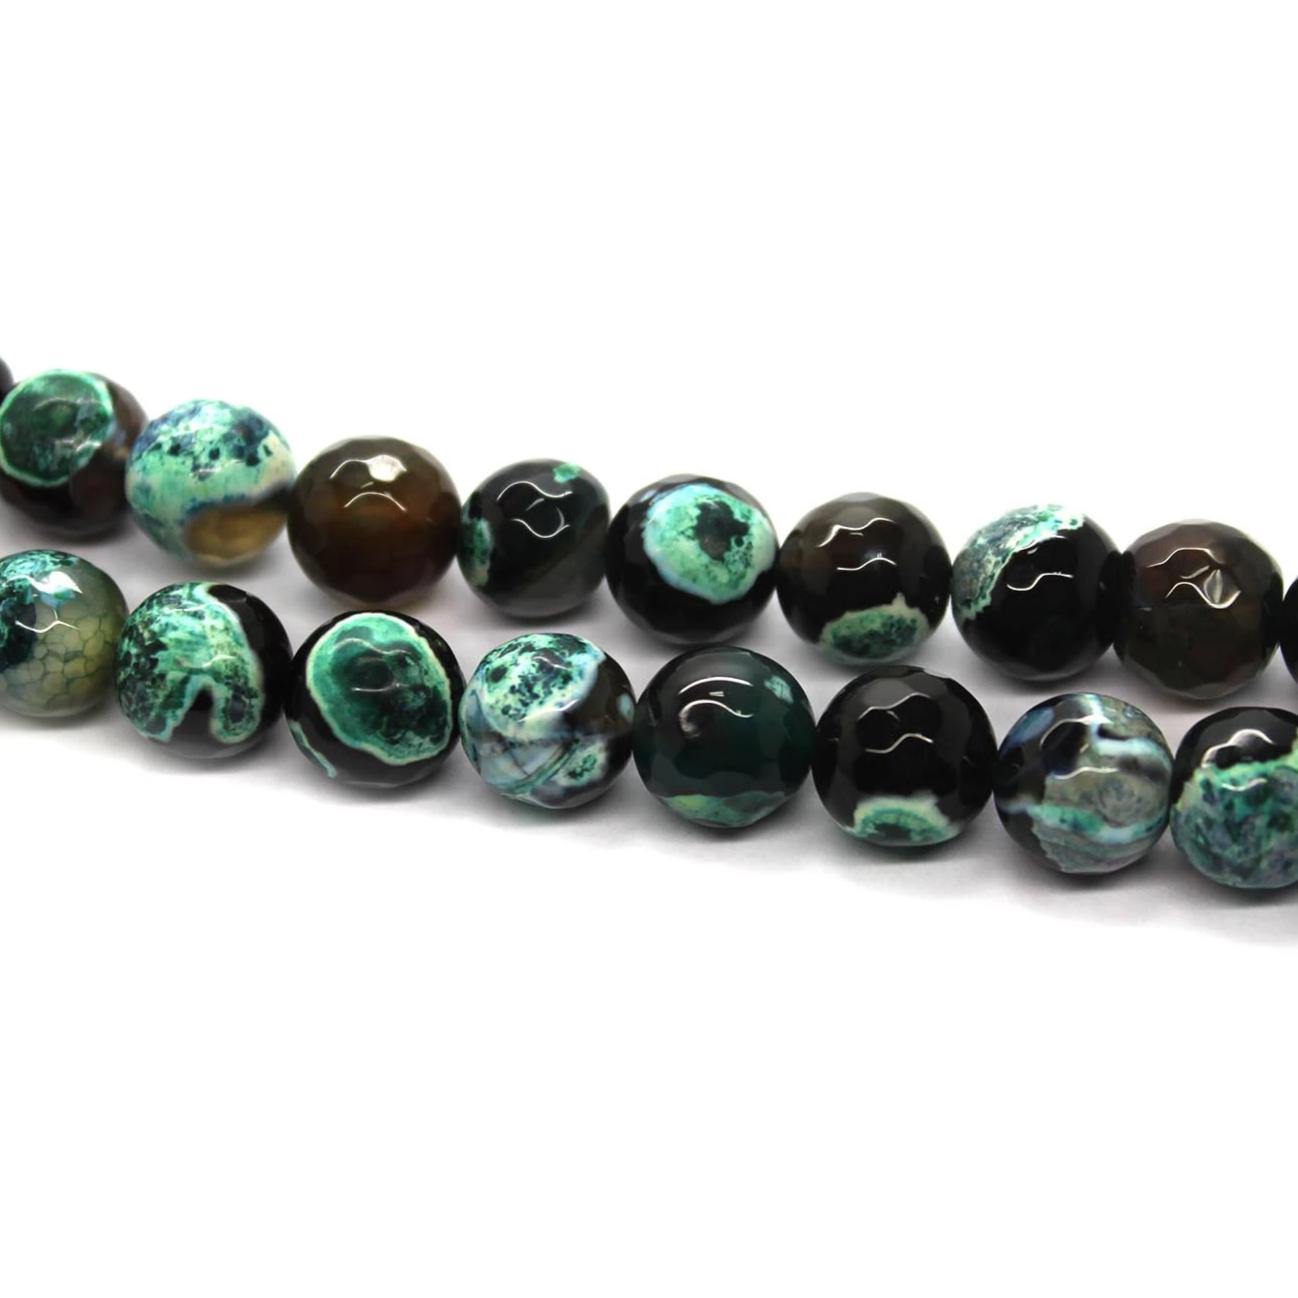 Agate Faceted - Dark Green Fire Agate, Semi-Precious Stone, 10mm, 38 pcs per strand - Butterfly Beads